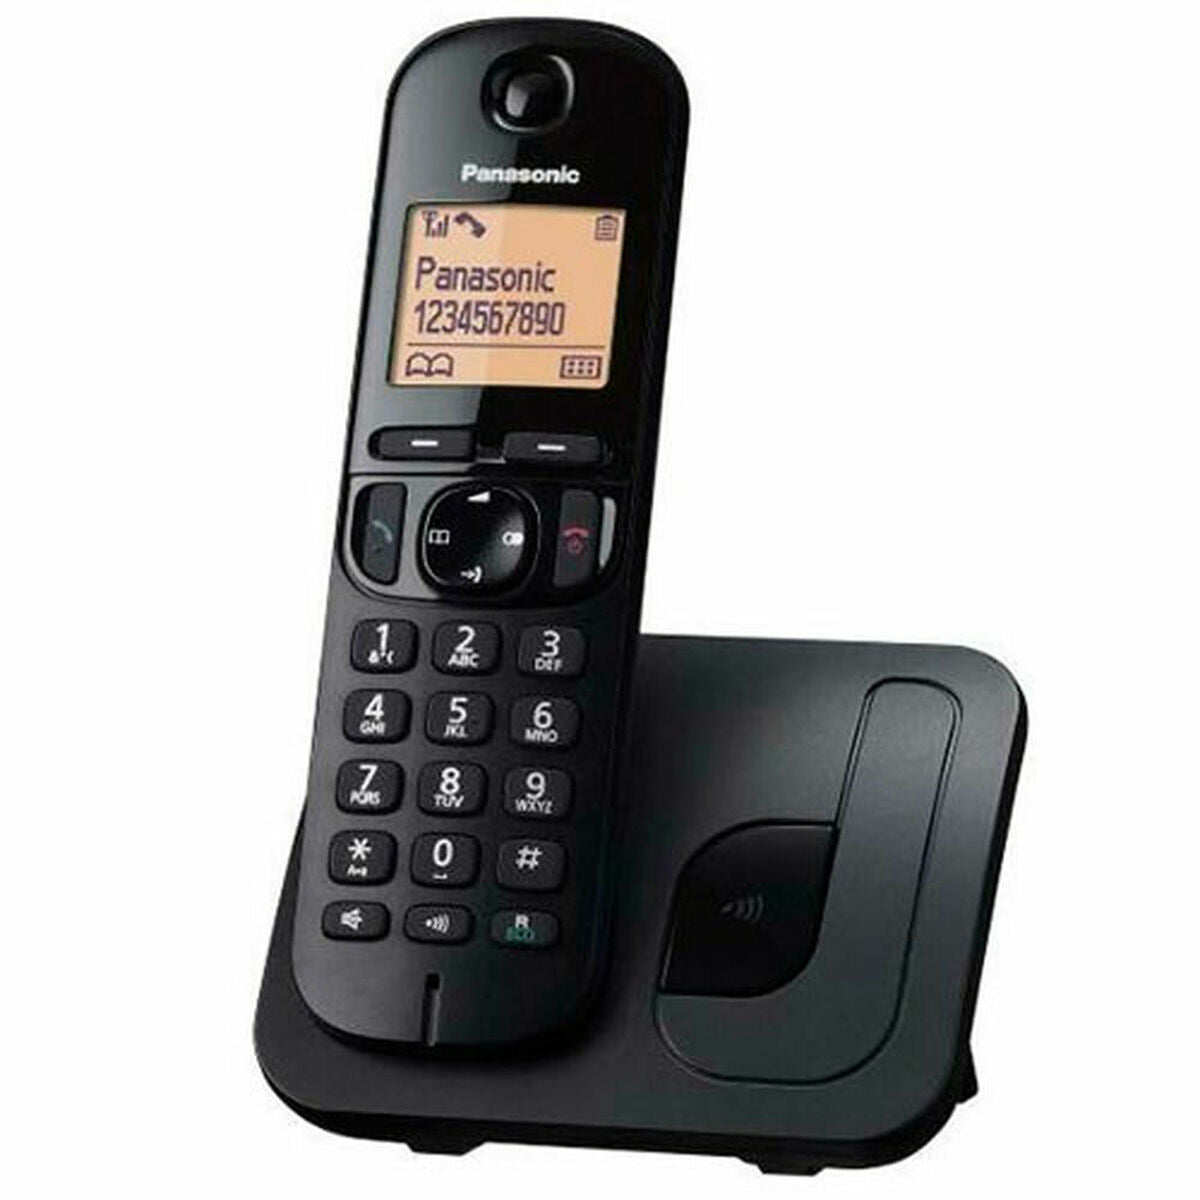 Wireless Phone Panasonic KX-TGC210SPB, Panasonic, Electronics, Landline telephones and accessories, wireless-phone-panasonic-kx-tgc210spb-1, Brand_Panasonic, category-reference-2609, category-reference-2617, category-reference-2619, category-reference-t-18372, category-reference-t-19653, Condition_NEW, office, Price_20 - 50, telephones & tablets, Teleworking, RiotNook